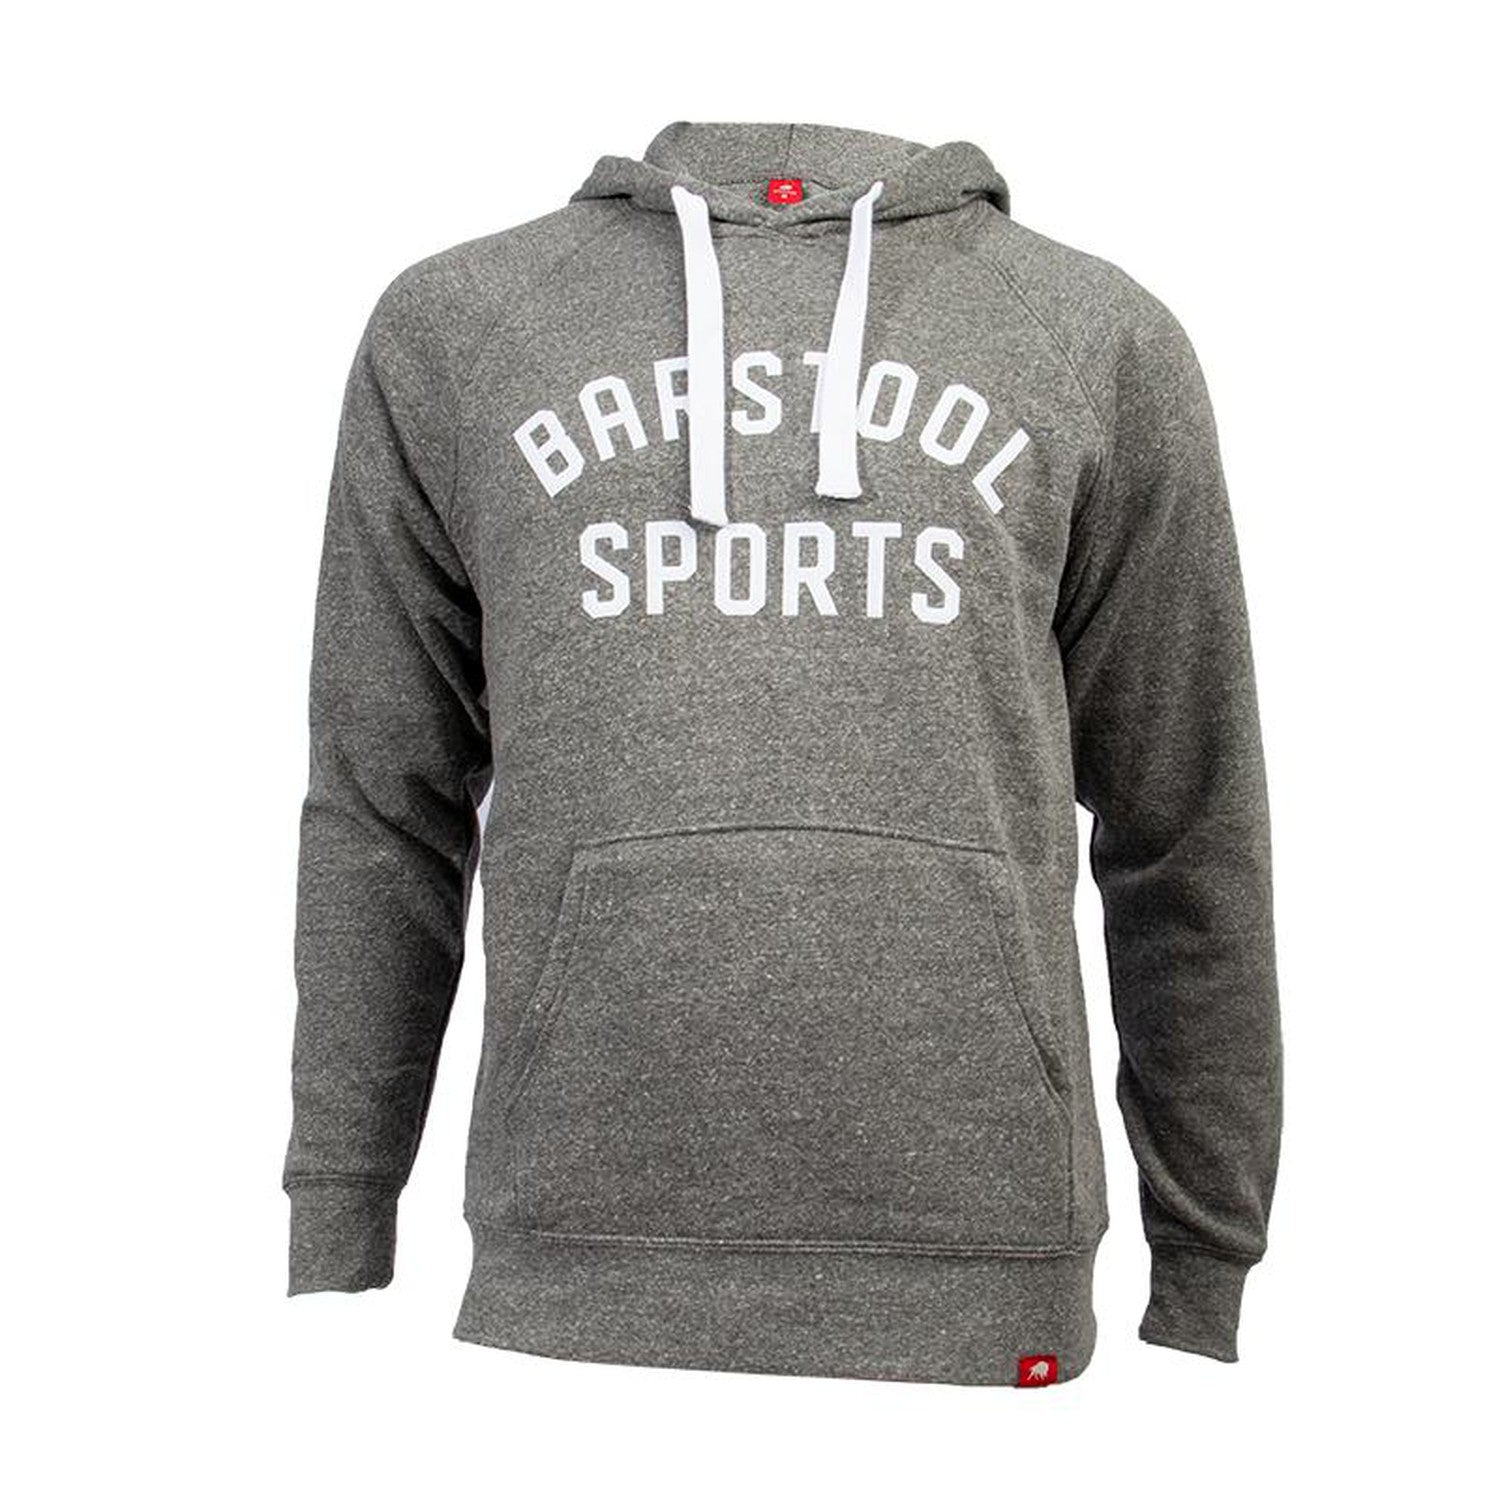 Barstool Sportiqe Applique Olsen Hoodie-Hoodies & Sweatshirts-Barstool Sports-Grey-S-Barstool Sports